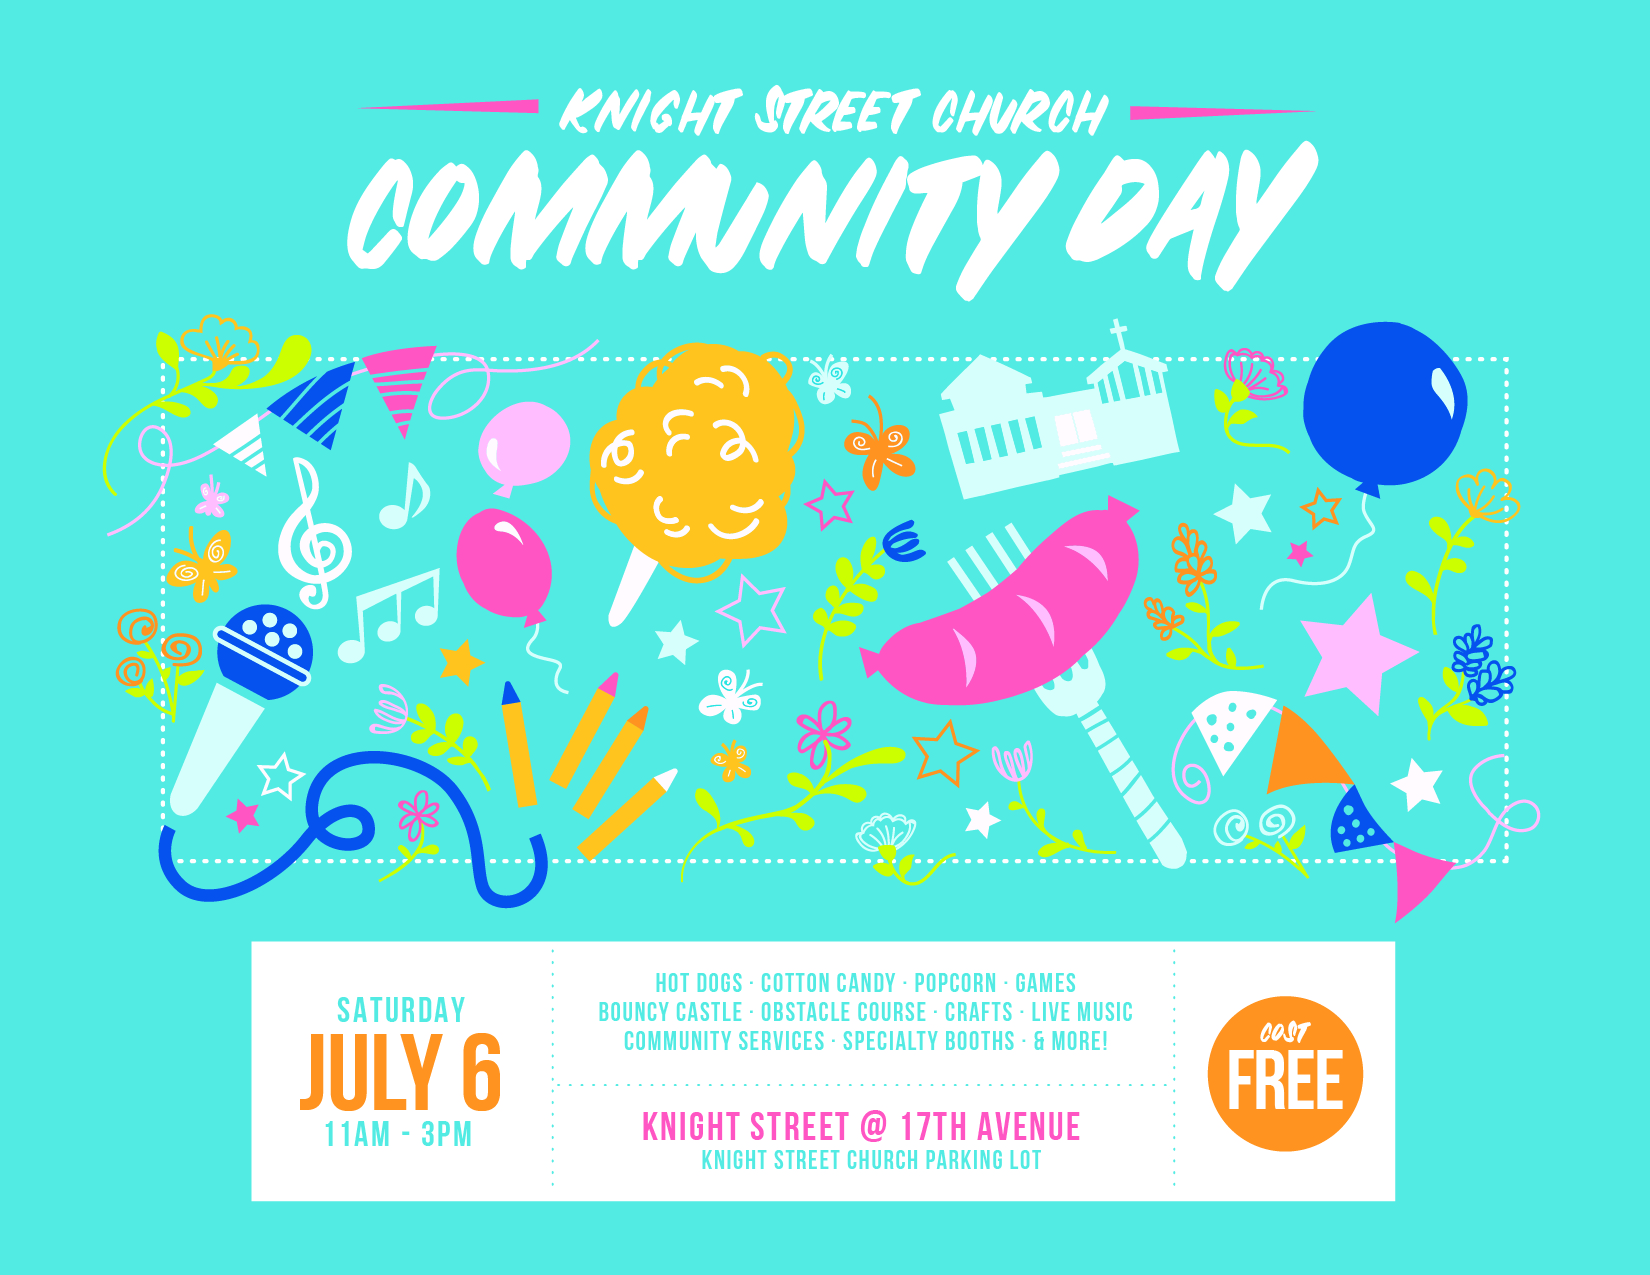 Knight Street Church-Community Day